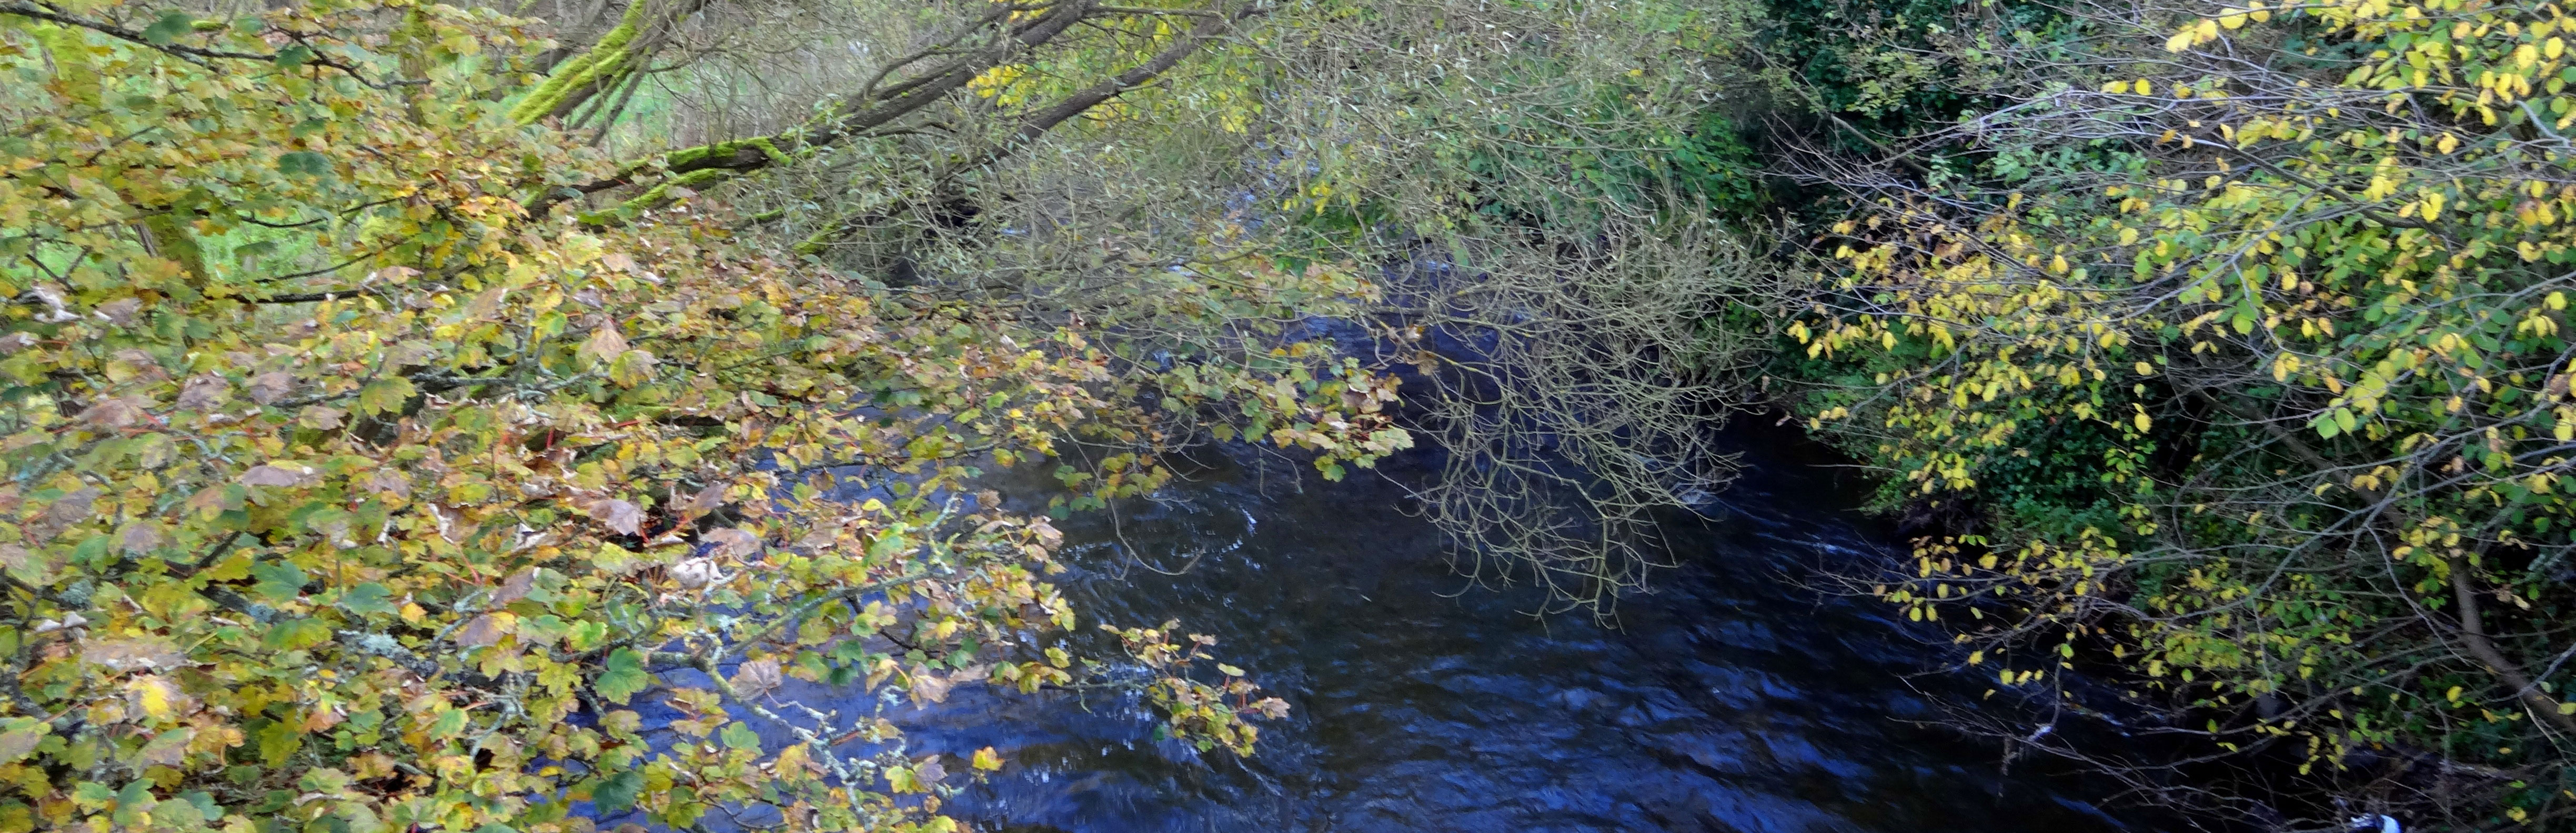 The River Leven near Balgonie, Fife. Ian Kumekawa, October 2012.